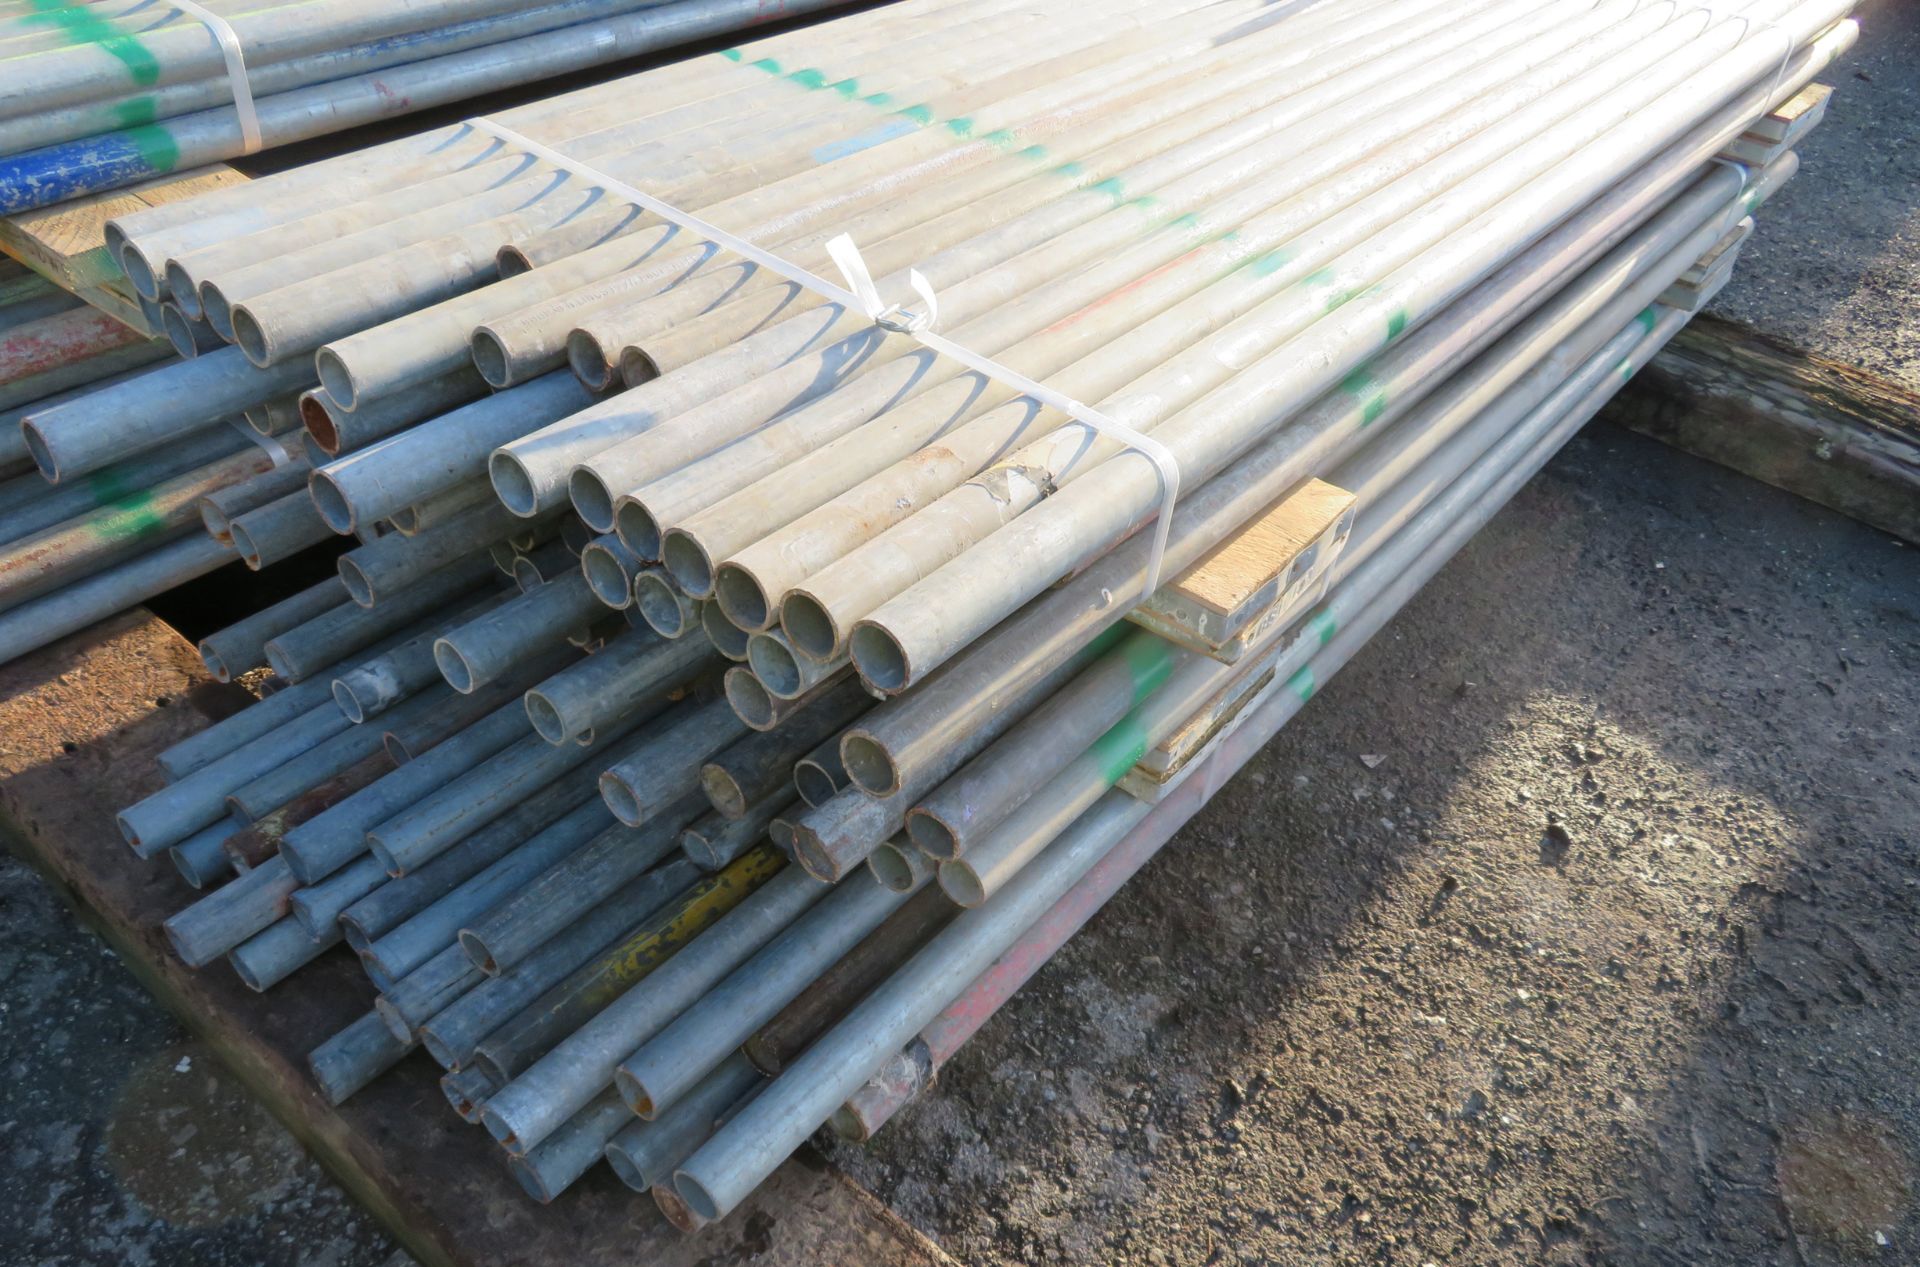 150x Various Length Galvanised Steel Scaffolding Poles. Lengths Range Between 8.5ft - 7.5ft. - Image 6 of 6